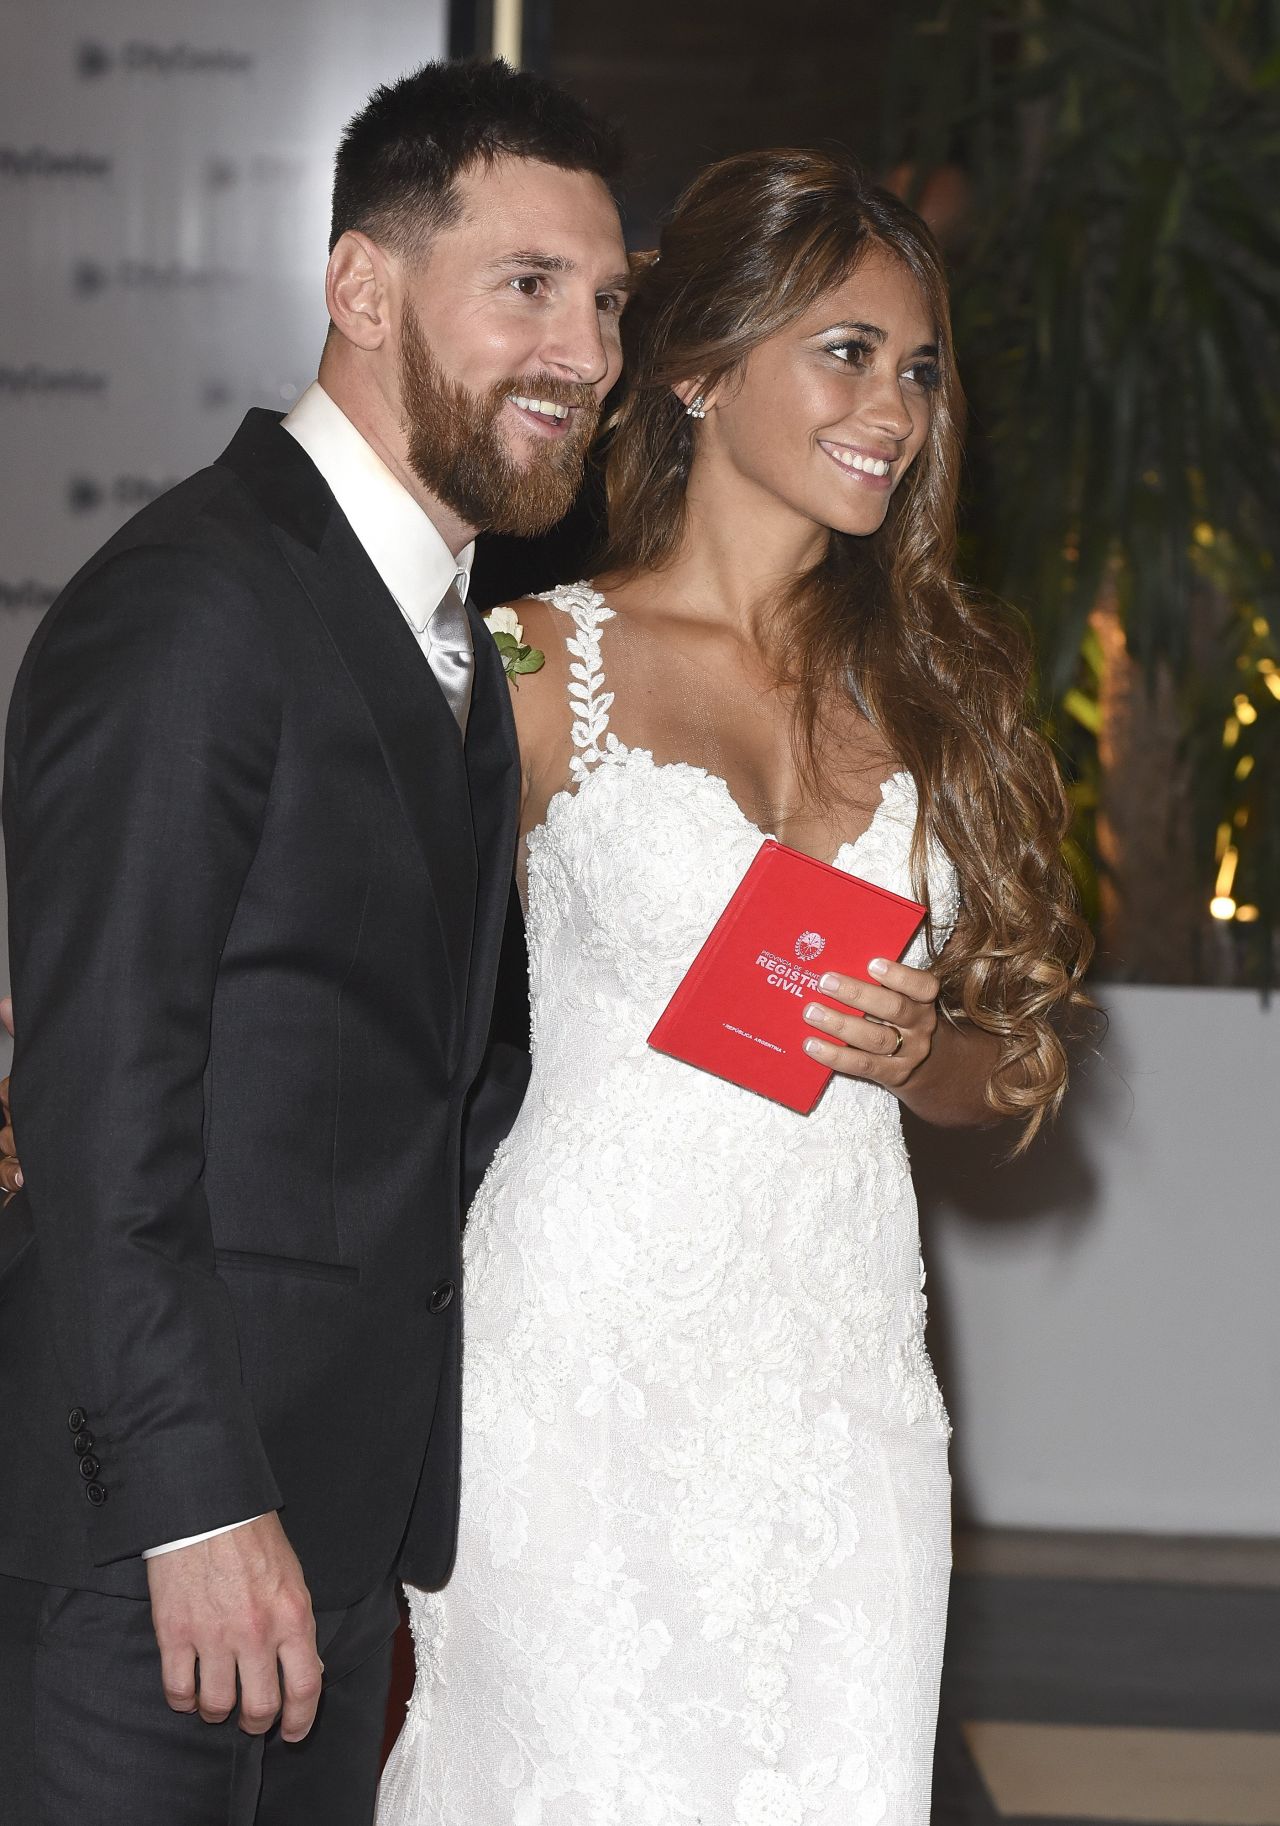 Lionel Messi and Wife Antonella Roccuzzo - Wedding Reception in